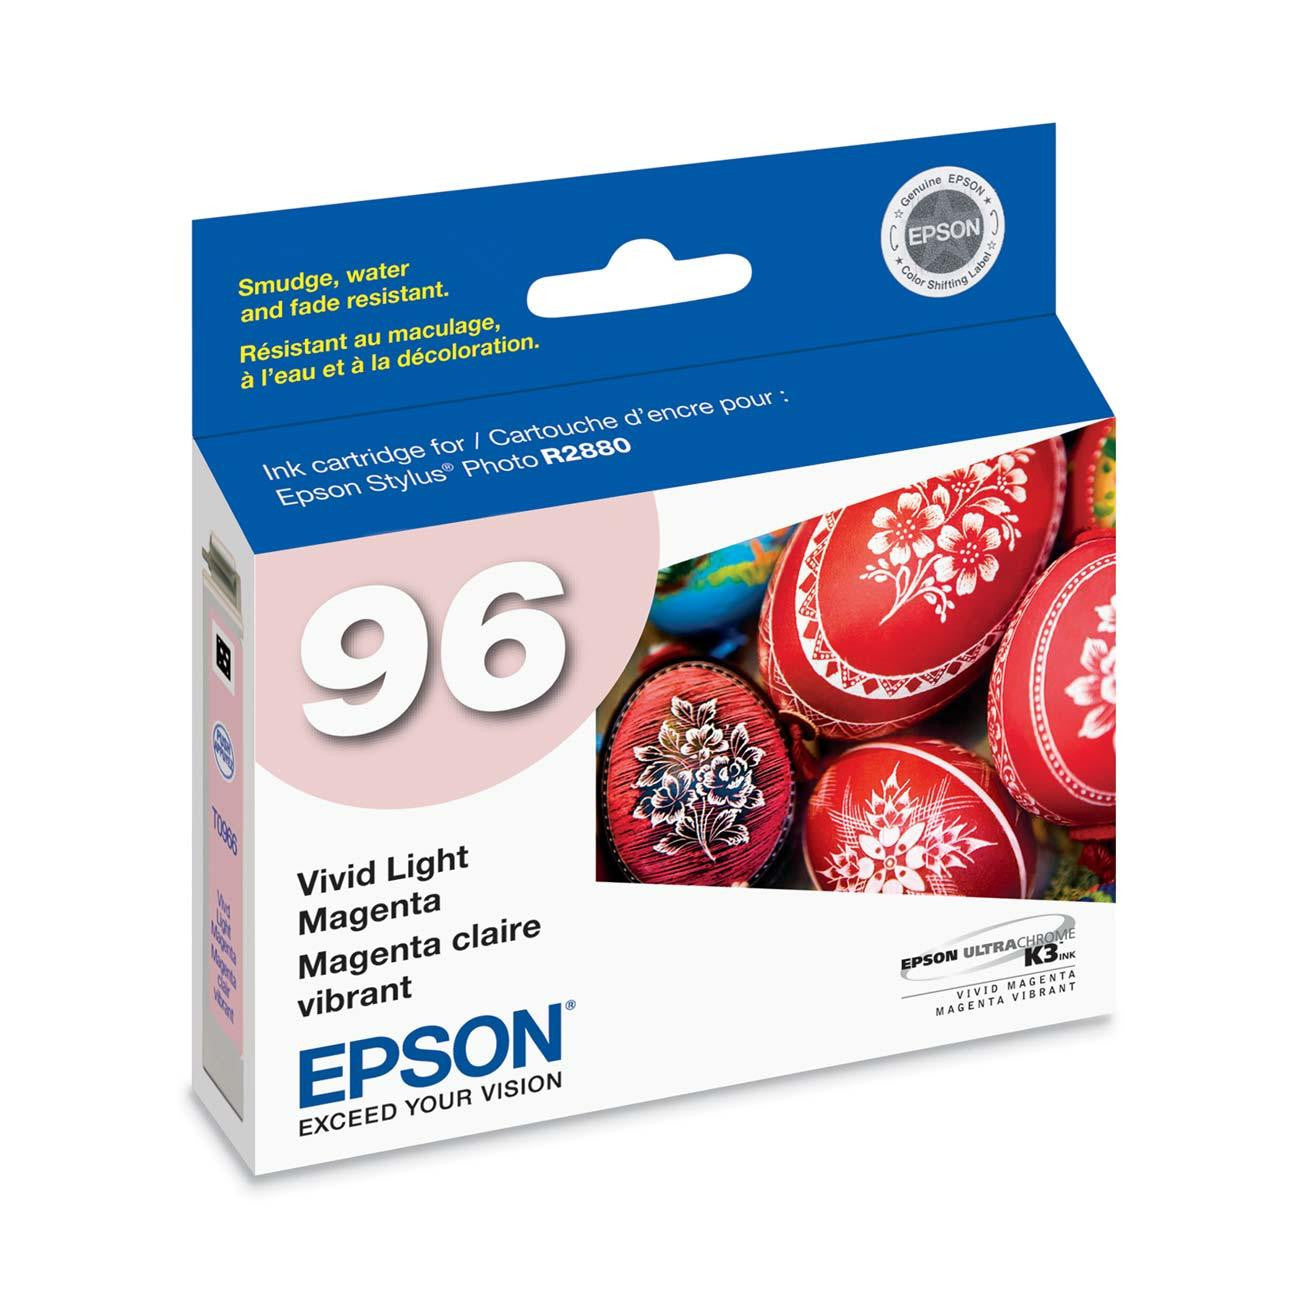 Epson T096620 R2880 Vivid Light Magenta Ink Cartridge (96), printers ink small format, Epson - Pictureline 